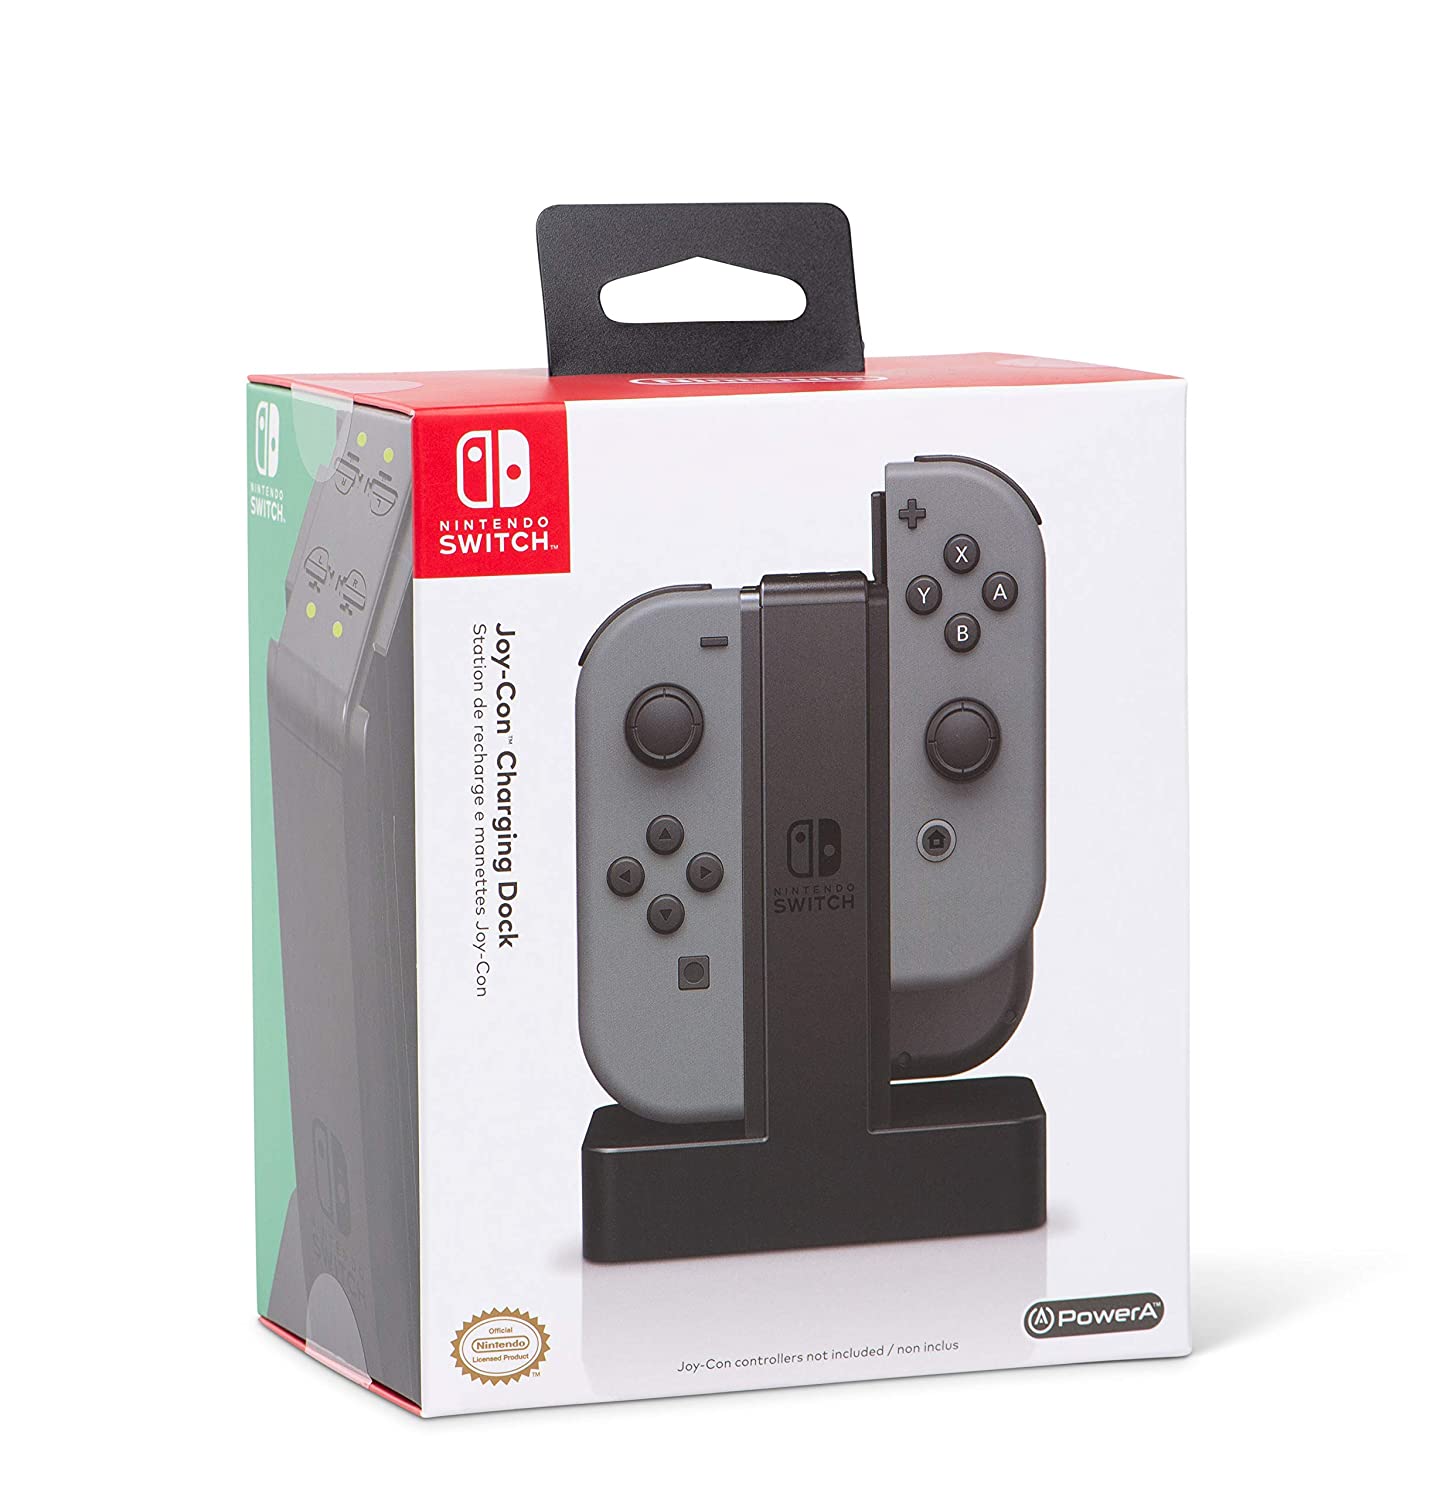 PowerA Joy-Con Charging Dock for Nintendo Switch $14.99 via Amazon